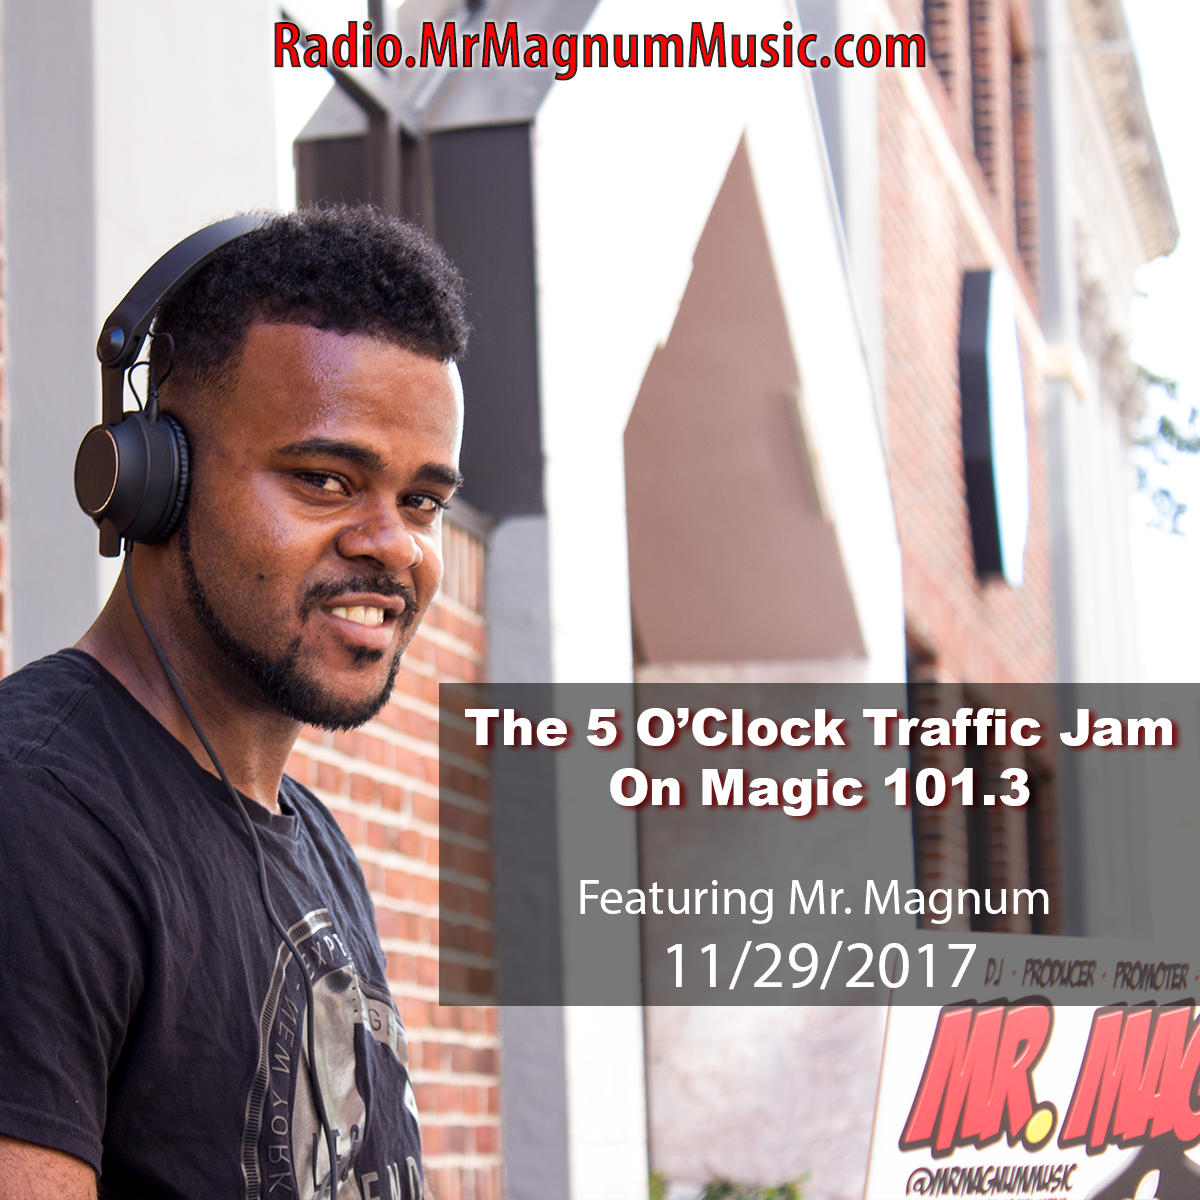 The 5 O'Clock Traffic Jam 20171129 featuring Gainesville's #1 DJ, Mr. Magnum on Magic 101.3